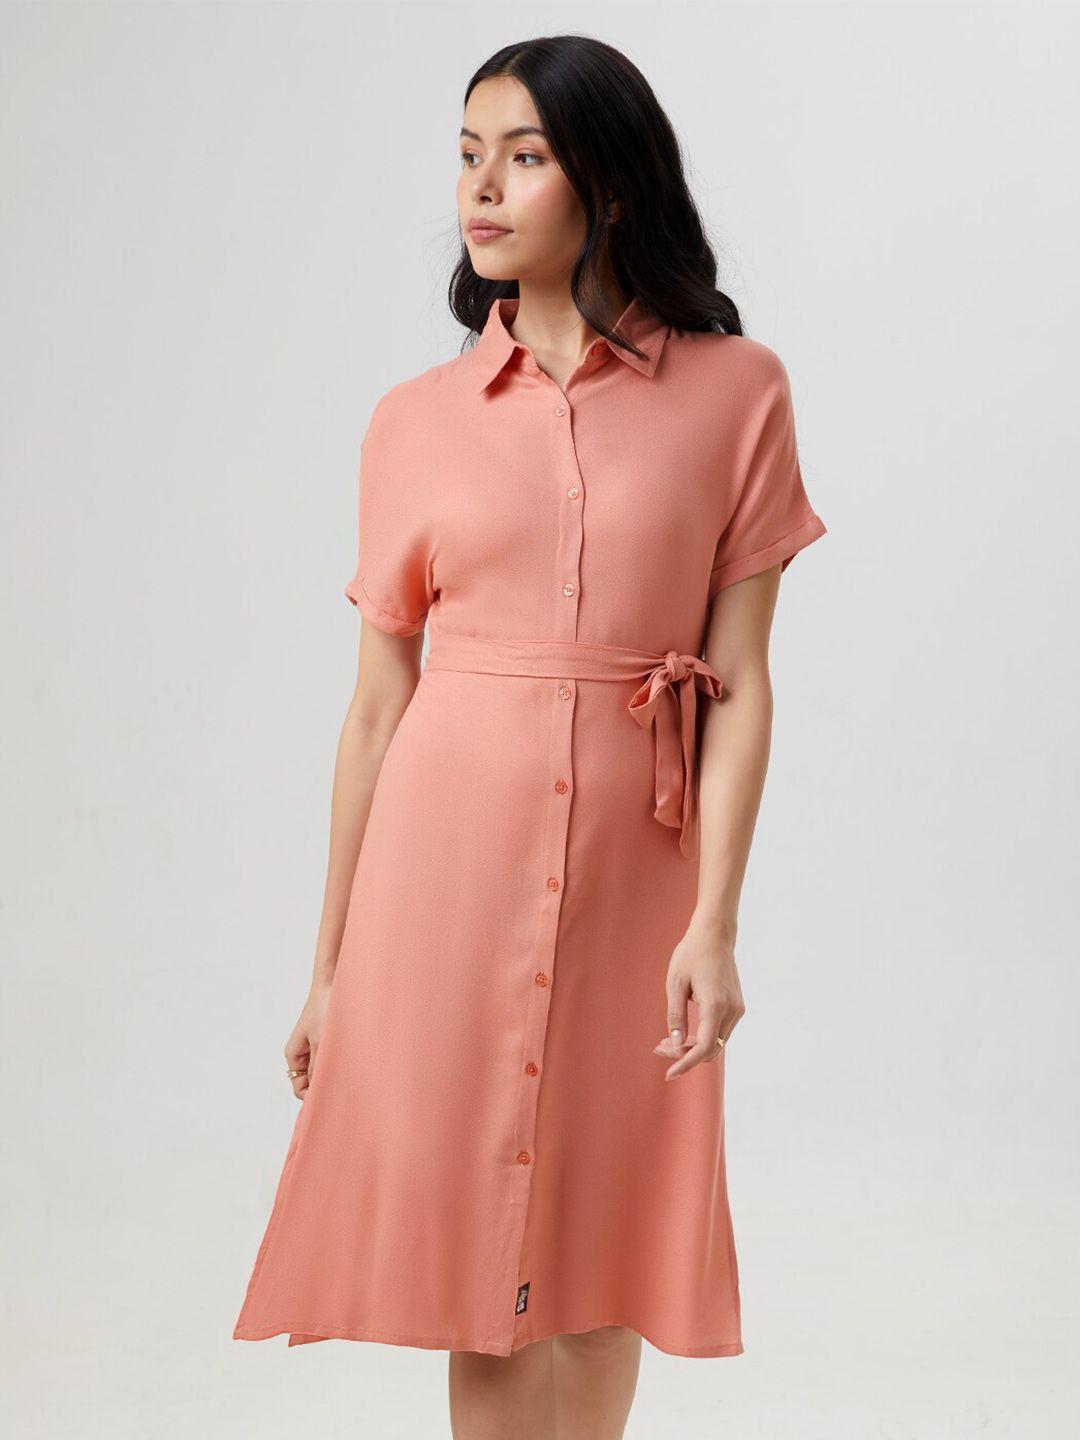 the souled store pink & aragon shirt dress